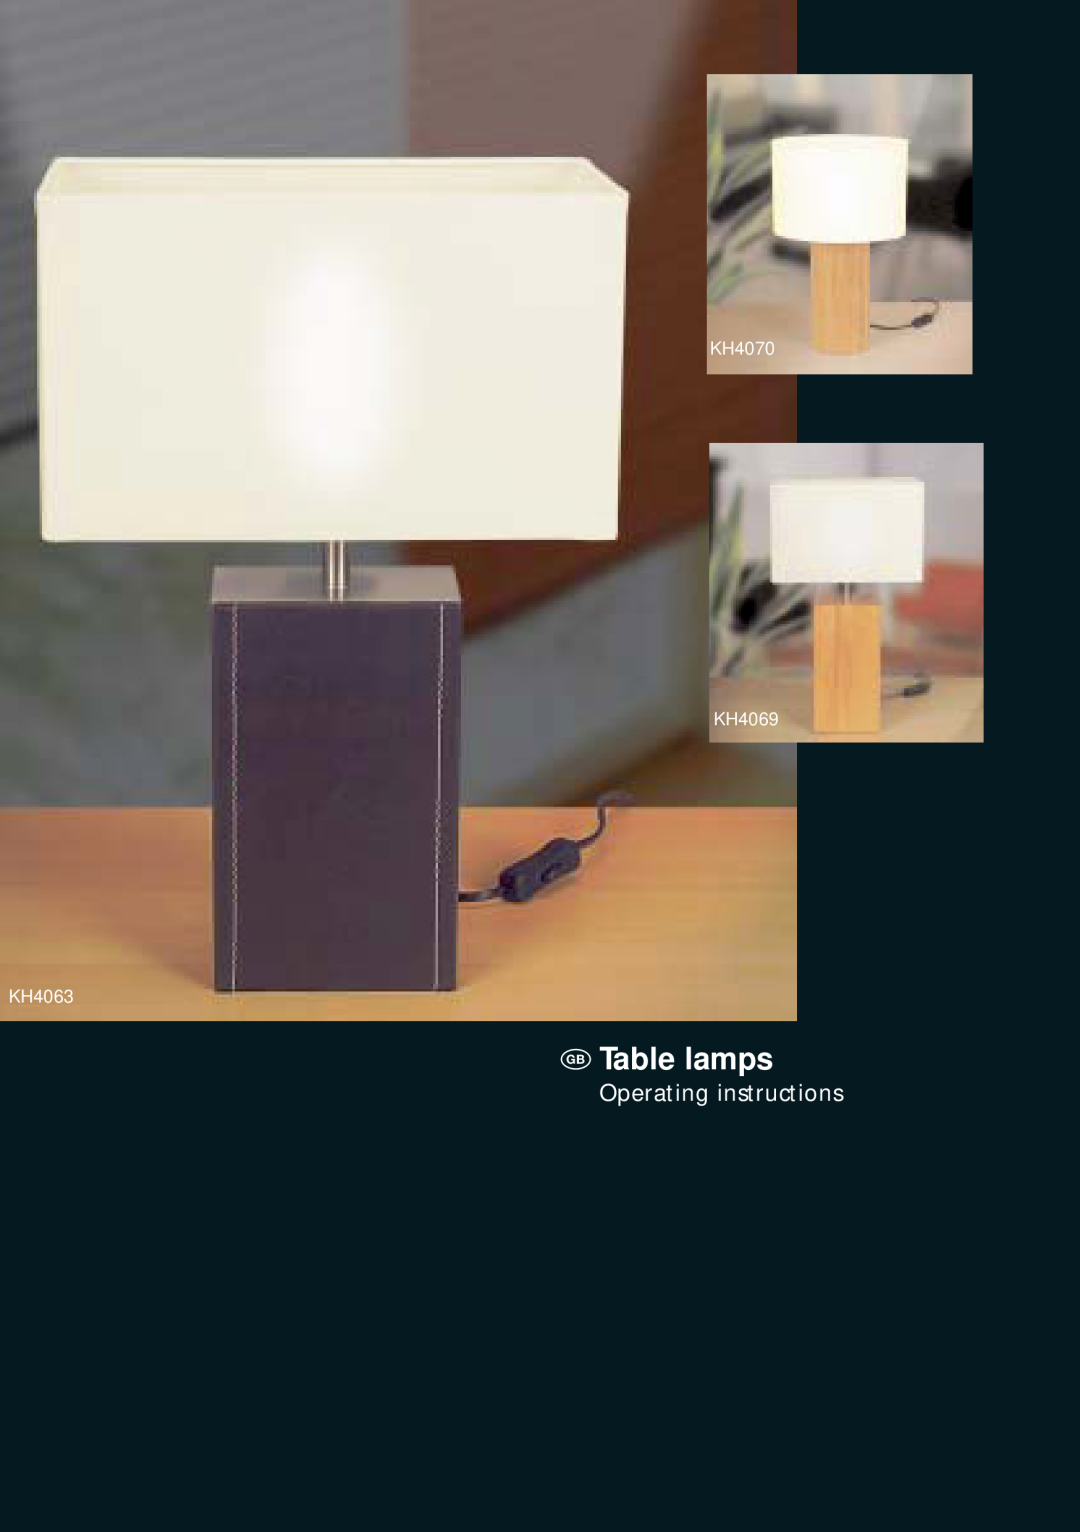 Kompernass manual  Table lamps, Operating instructions, KH4070 KH4069 KH4063 